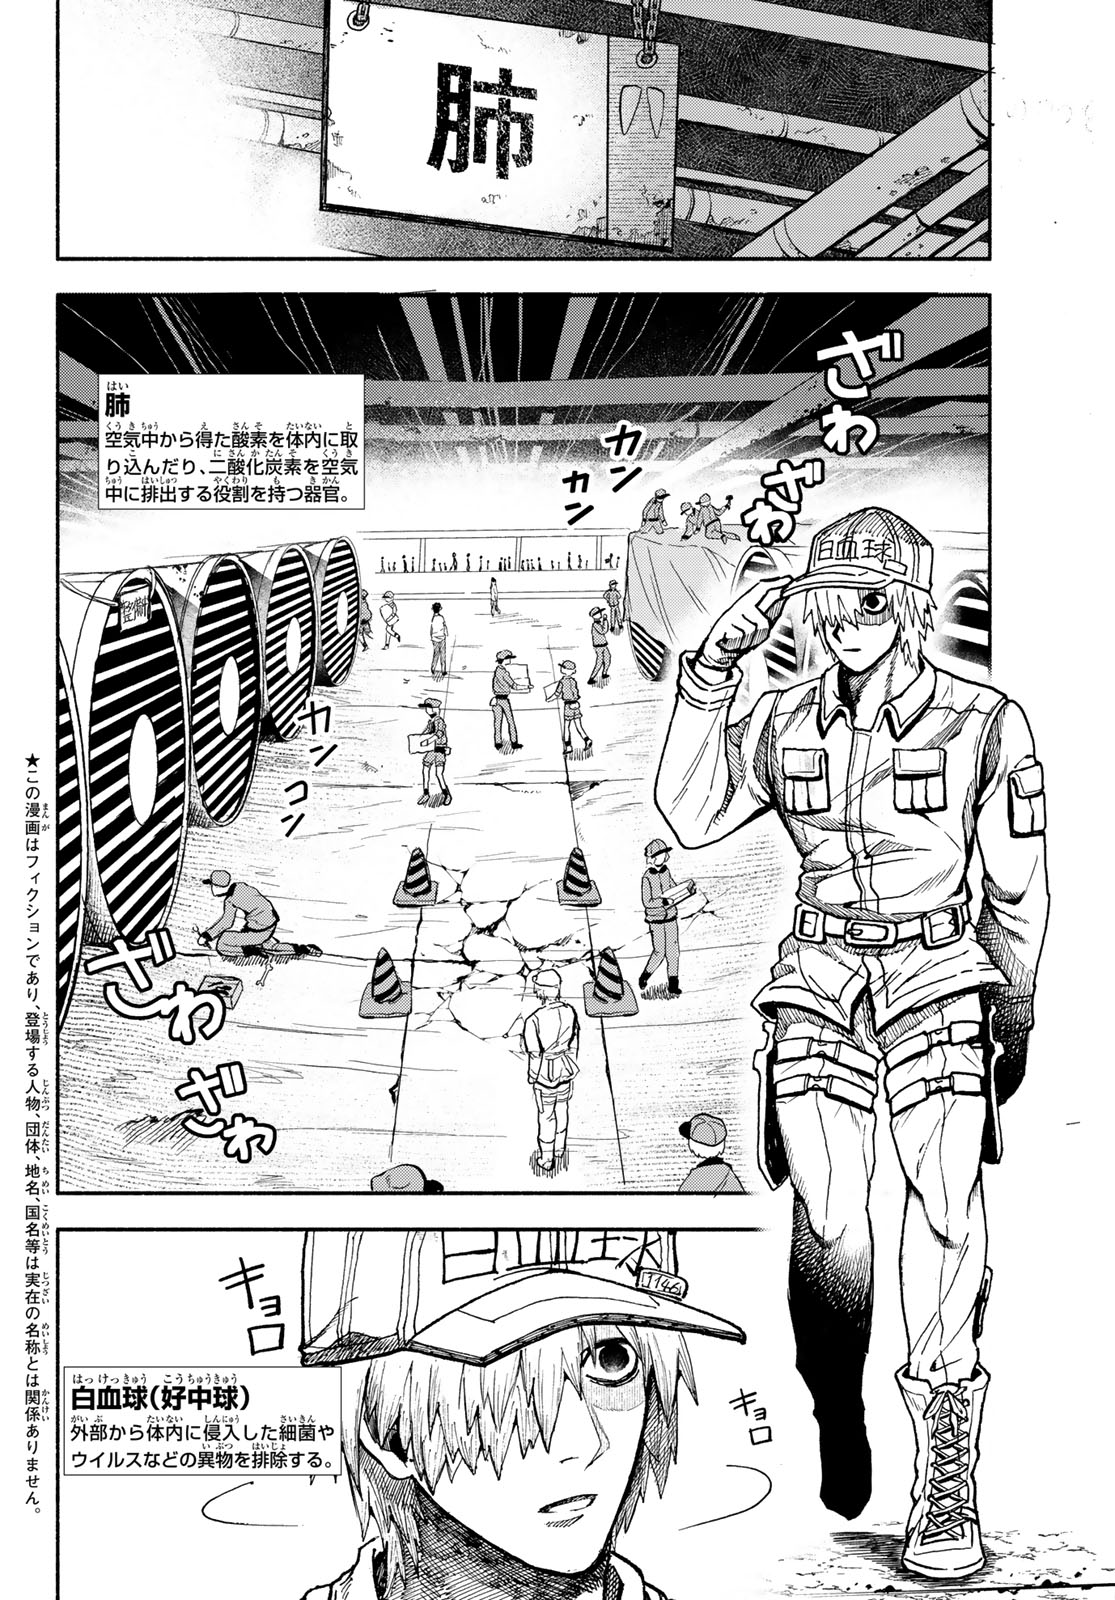 Hataraku Saibou Okusuri - Chapter 9 - Page 2